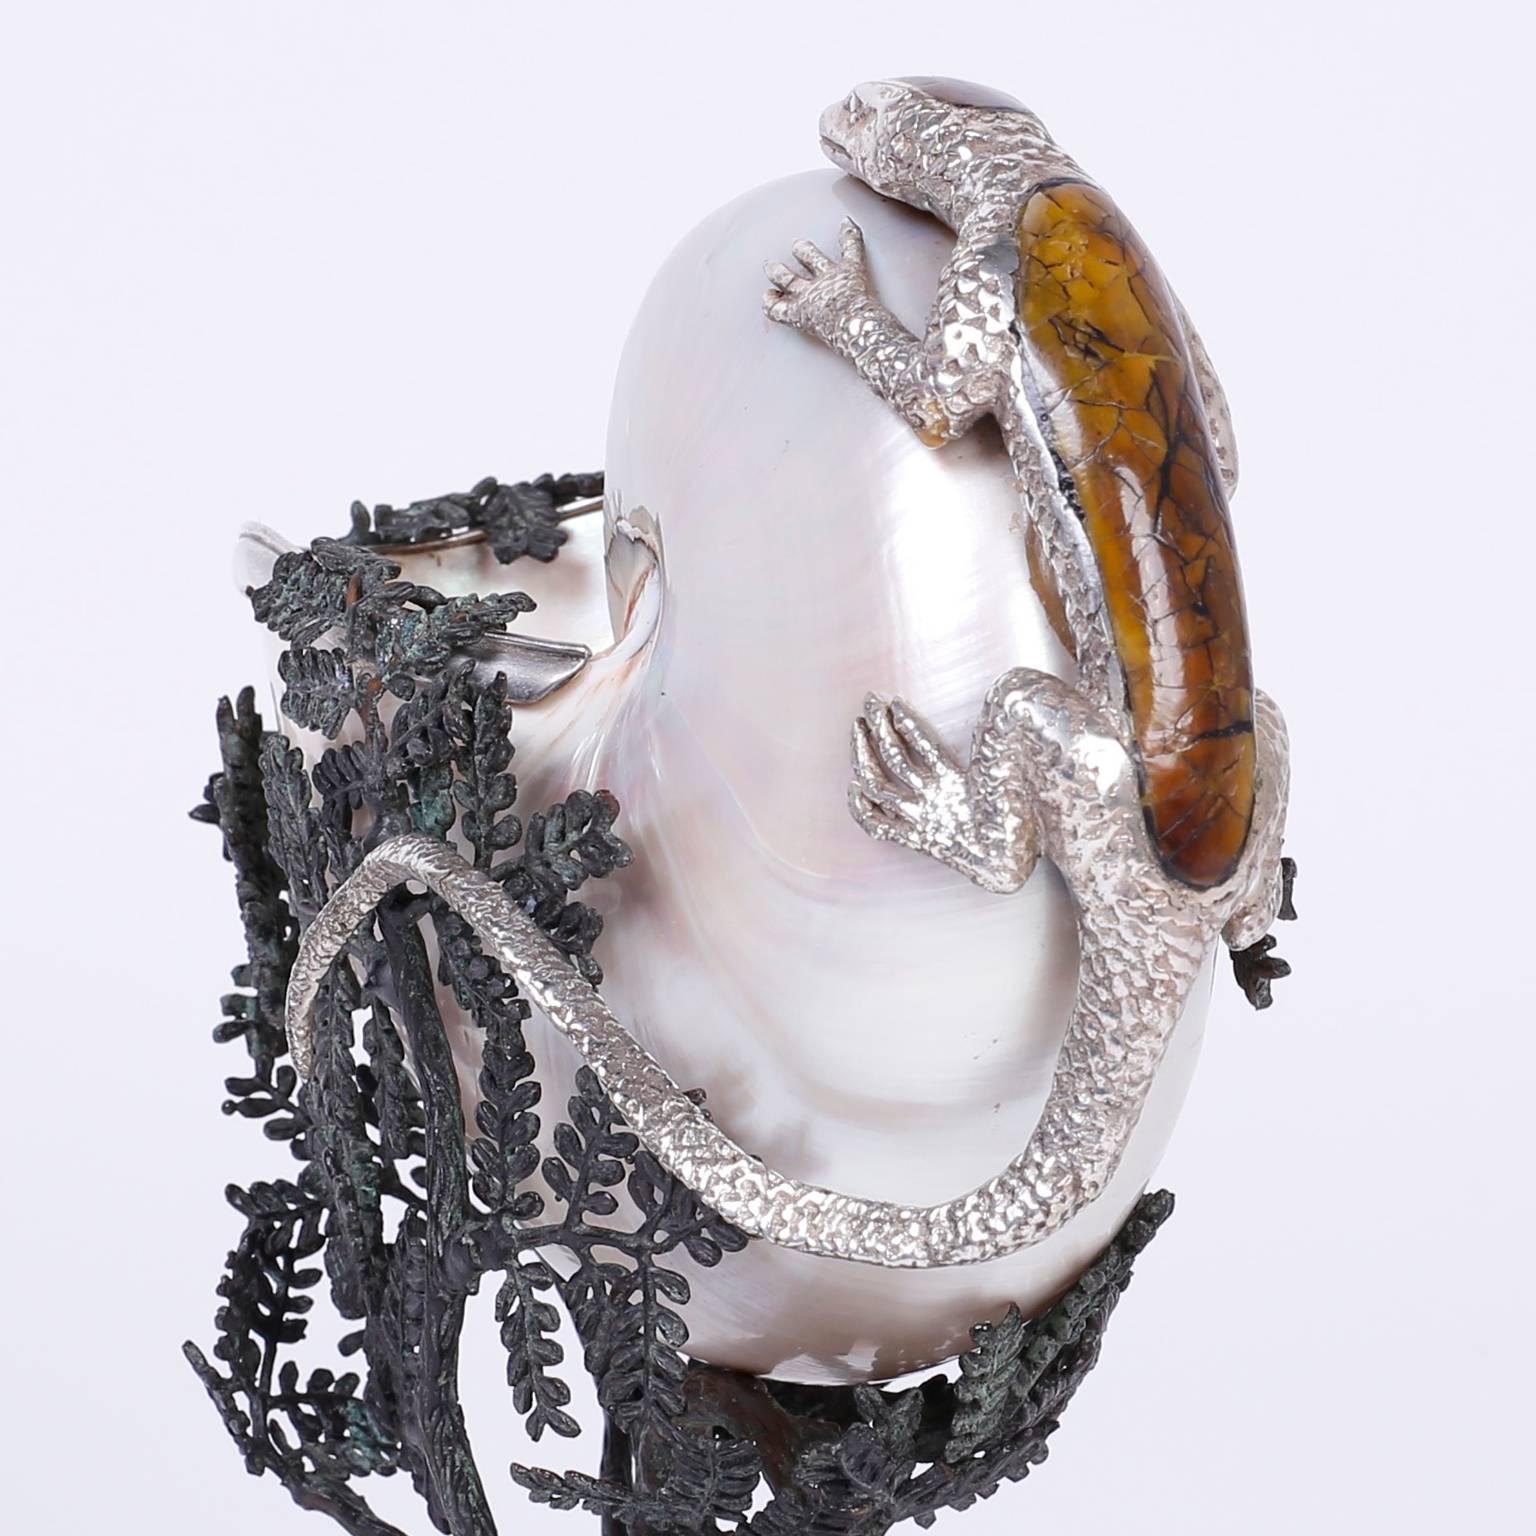 Organic Modern Mid-Century Silvered Metal Lizard and Nautilus Shell Sculpture